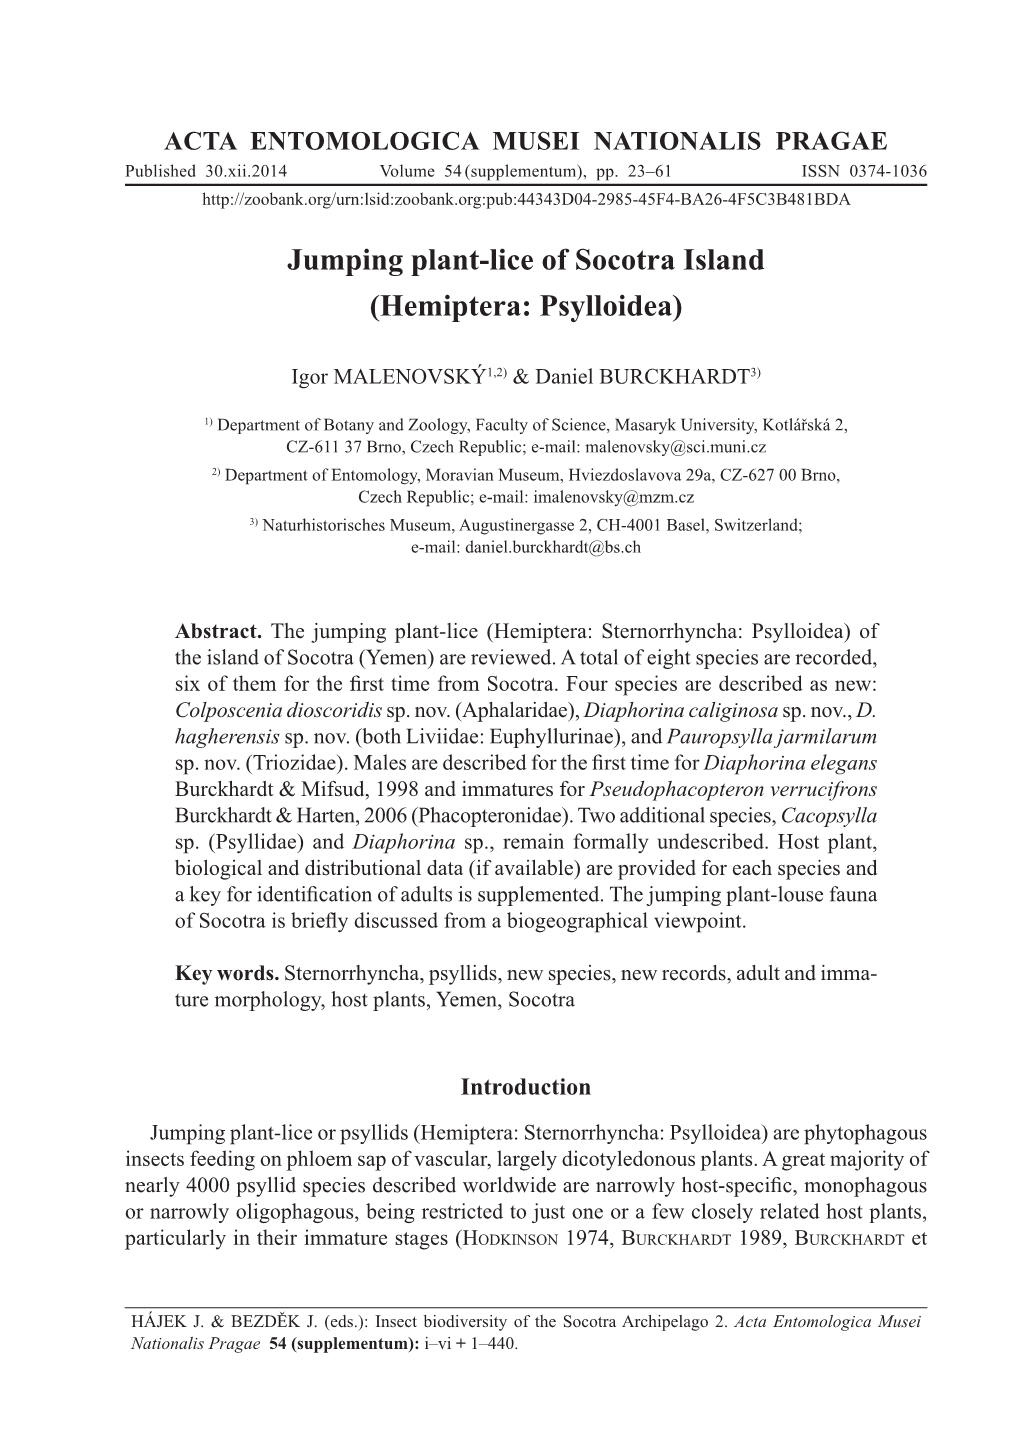 Jumping Plant-Lice of Socotra Island (Hemiptera: Psylloidea)